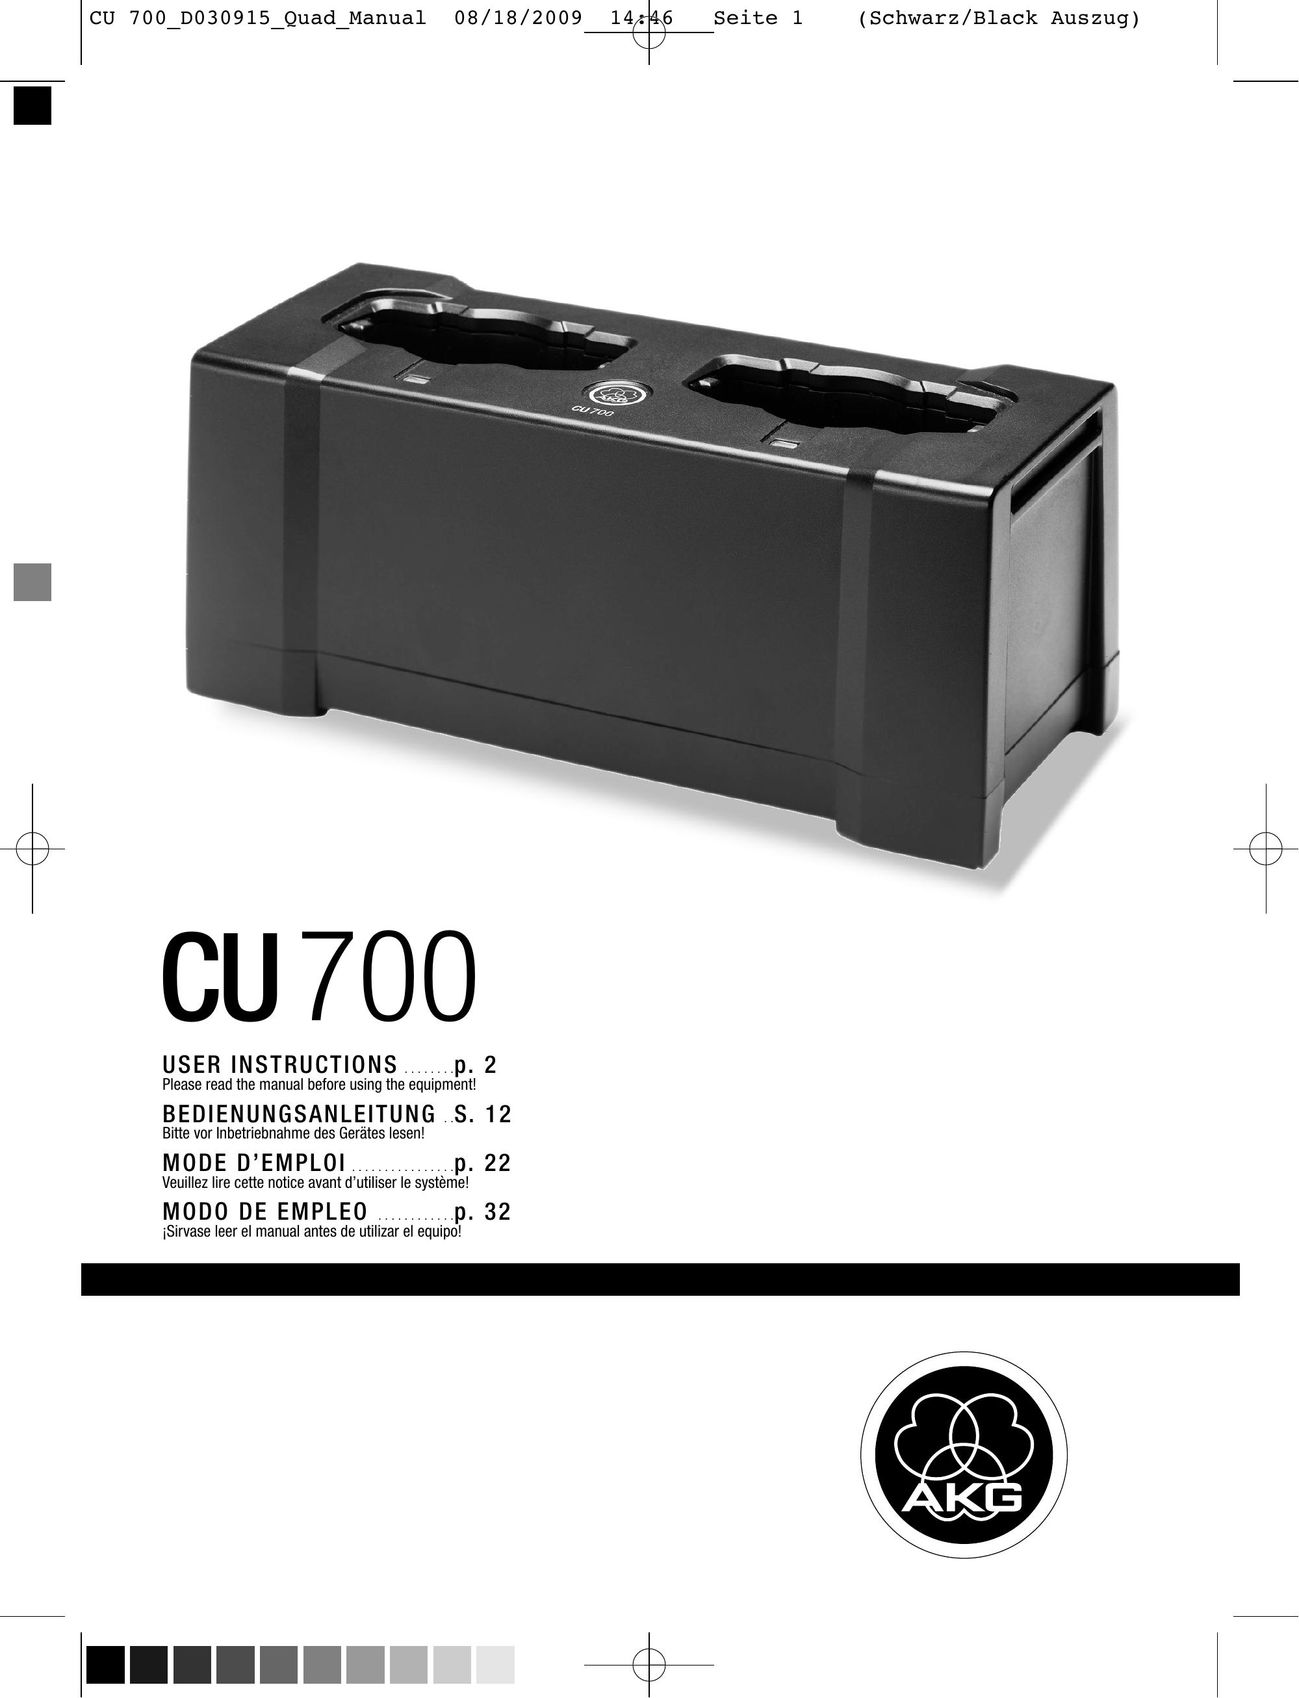 AKG Acoustics CU700 Battery Charger User Manual